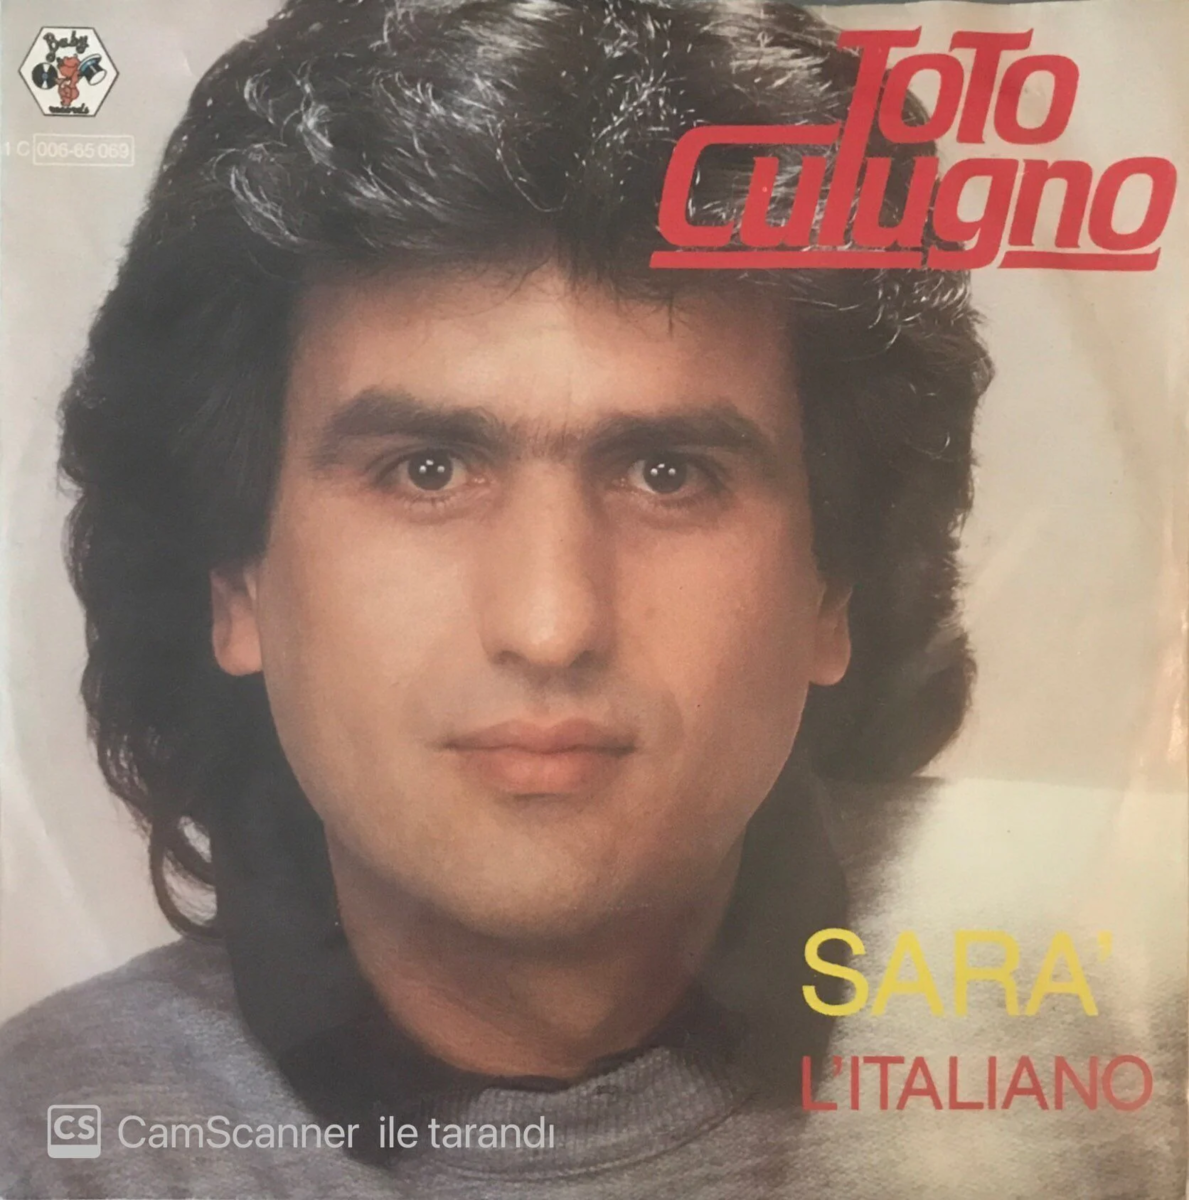 Итальянский певец 80-х тото Кутуньо. Тото Кутуньо 1983. Toto Cutugno в молодости. Тото Кутуньо в молодости. Итальянская музыка 80 х 90 х